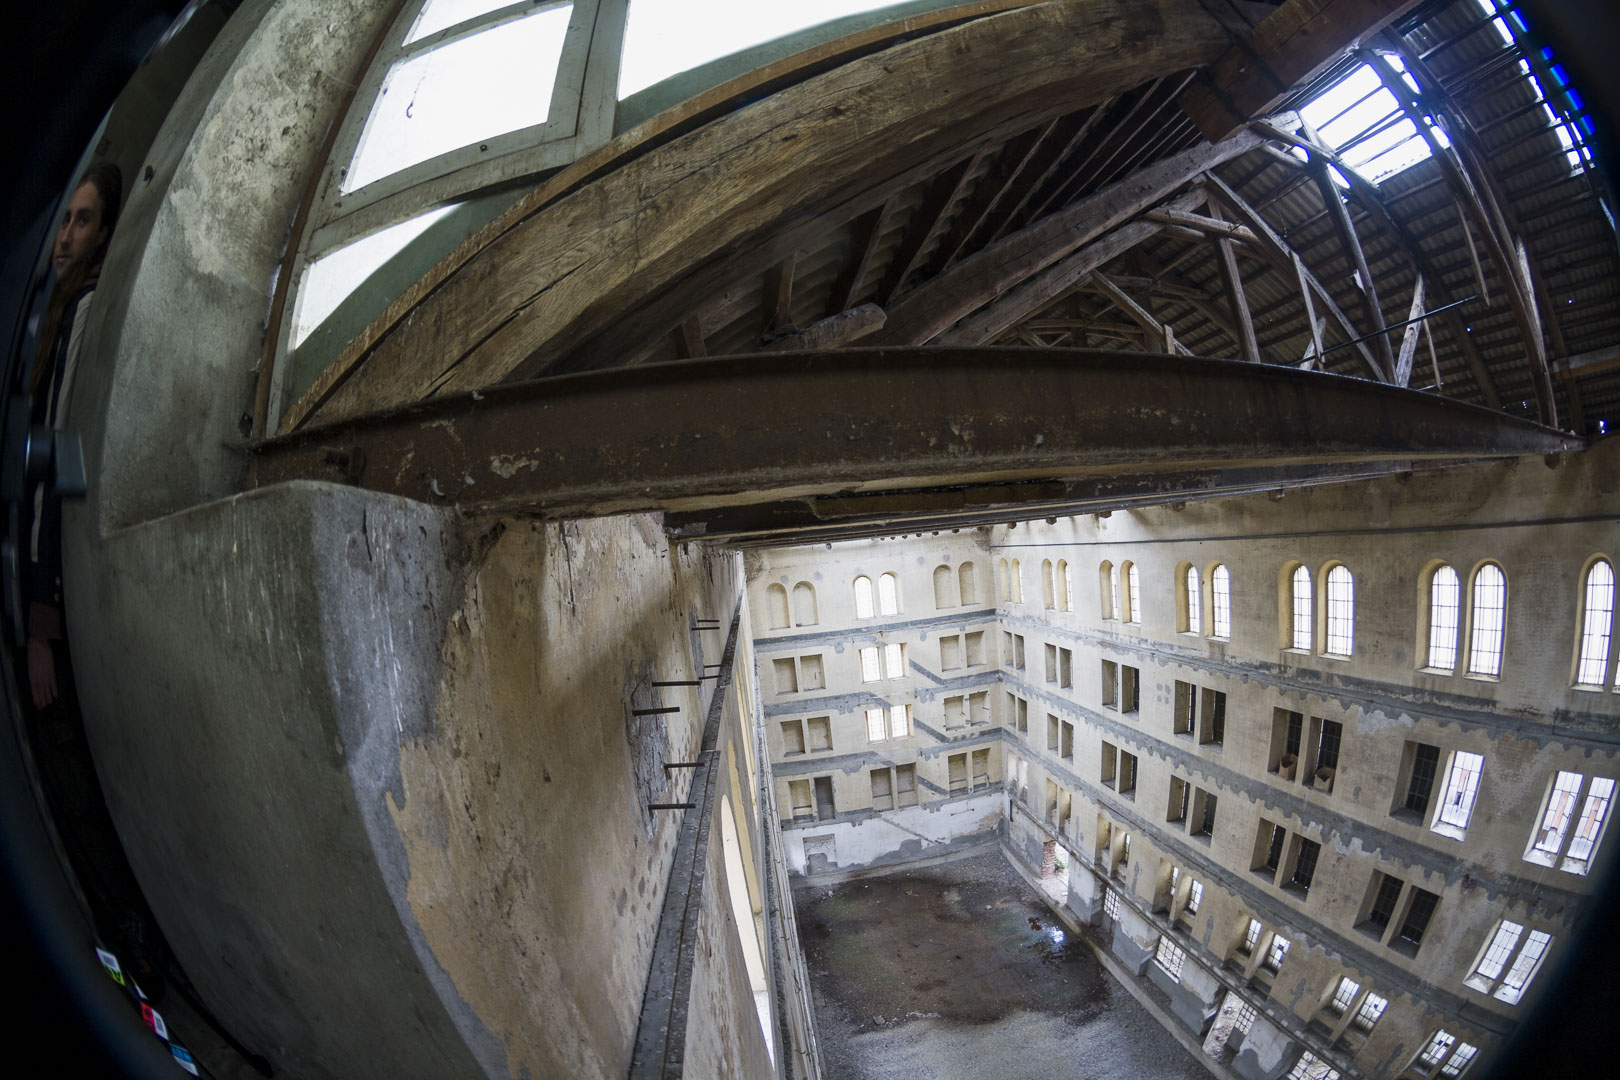 Abandoned Rise Mill – Santhia, Italy